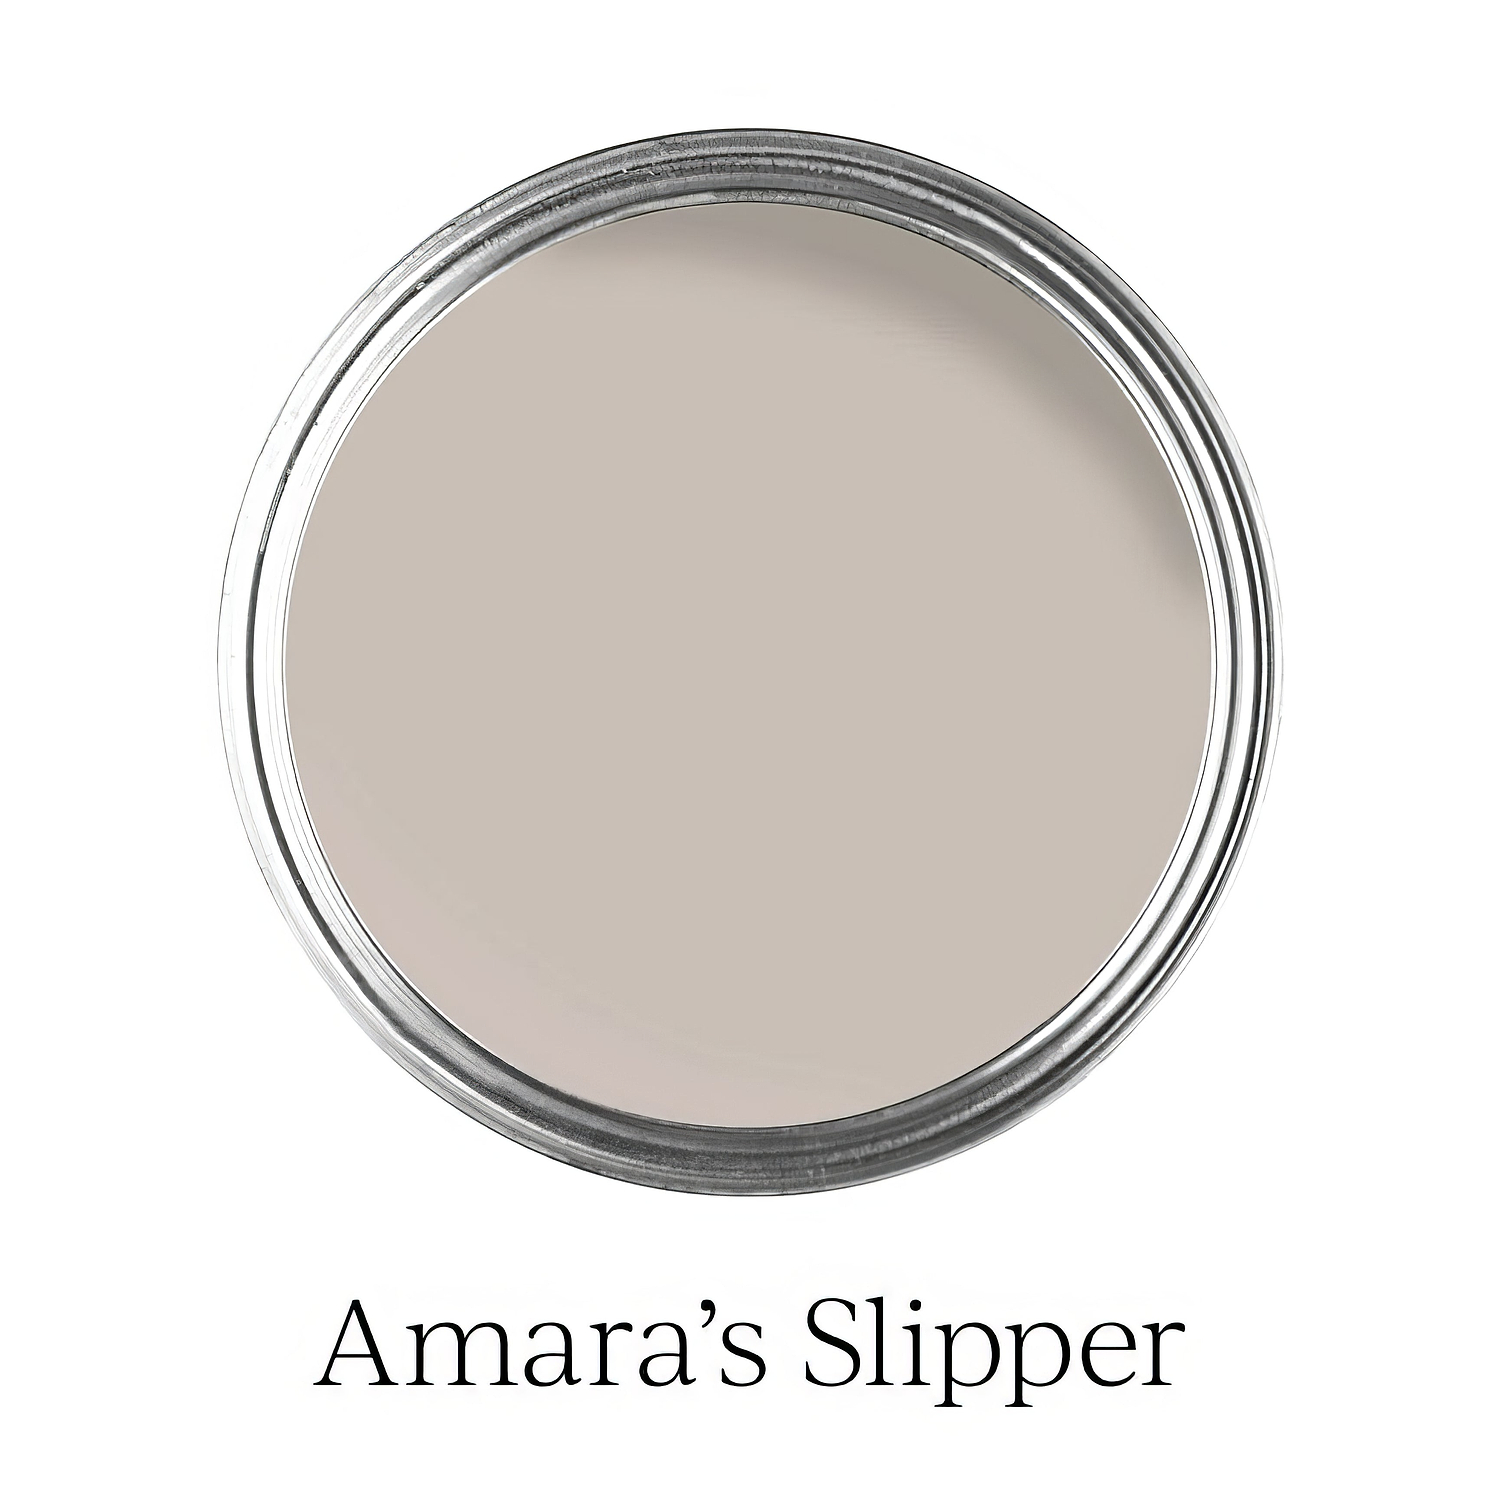 Proper Good Paint™ Amara&